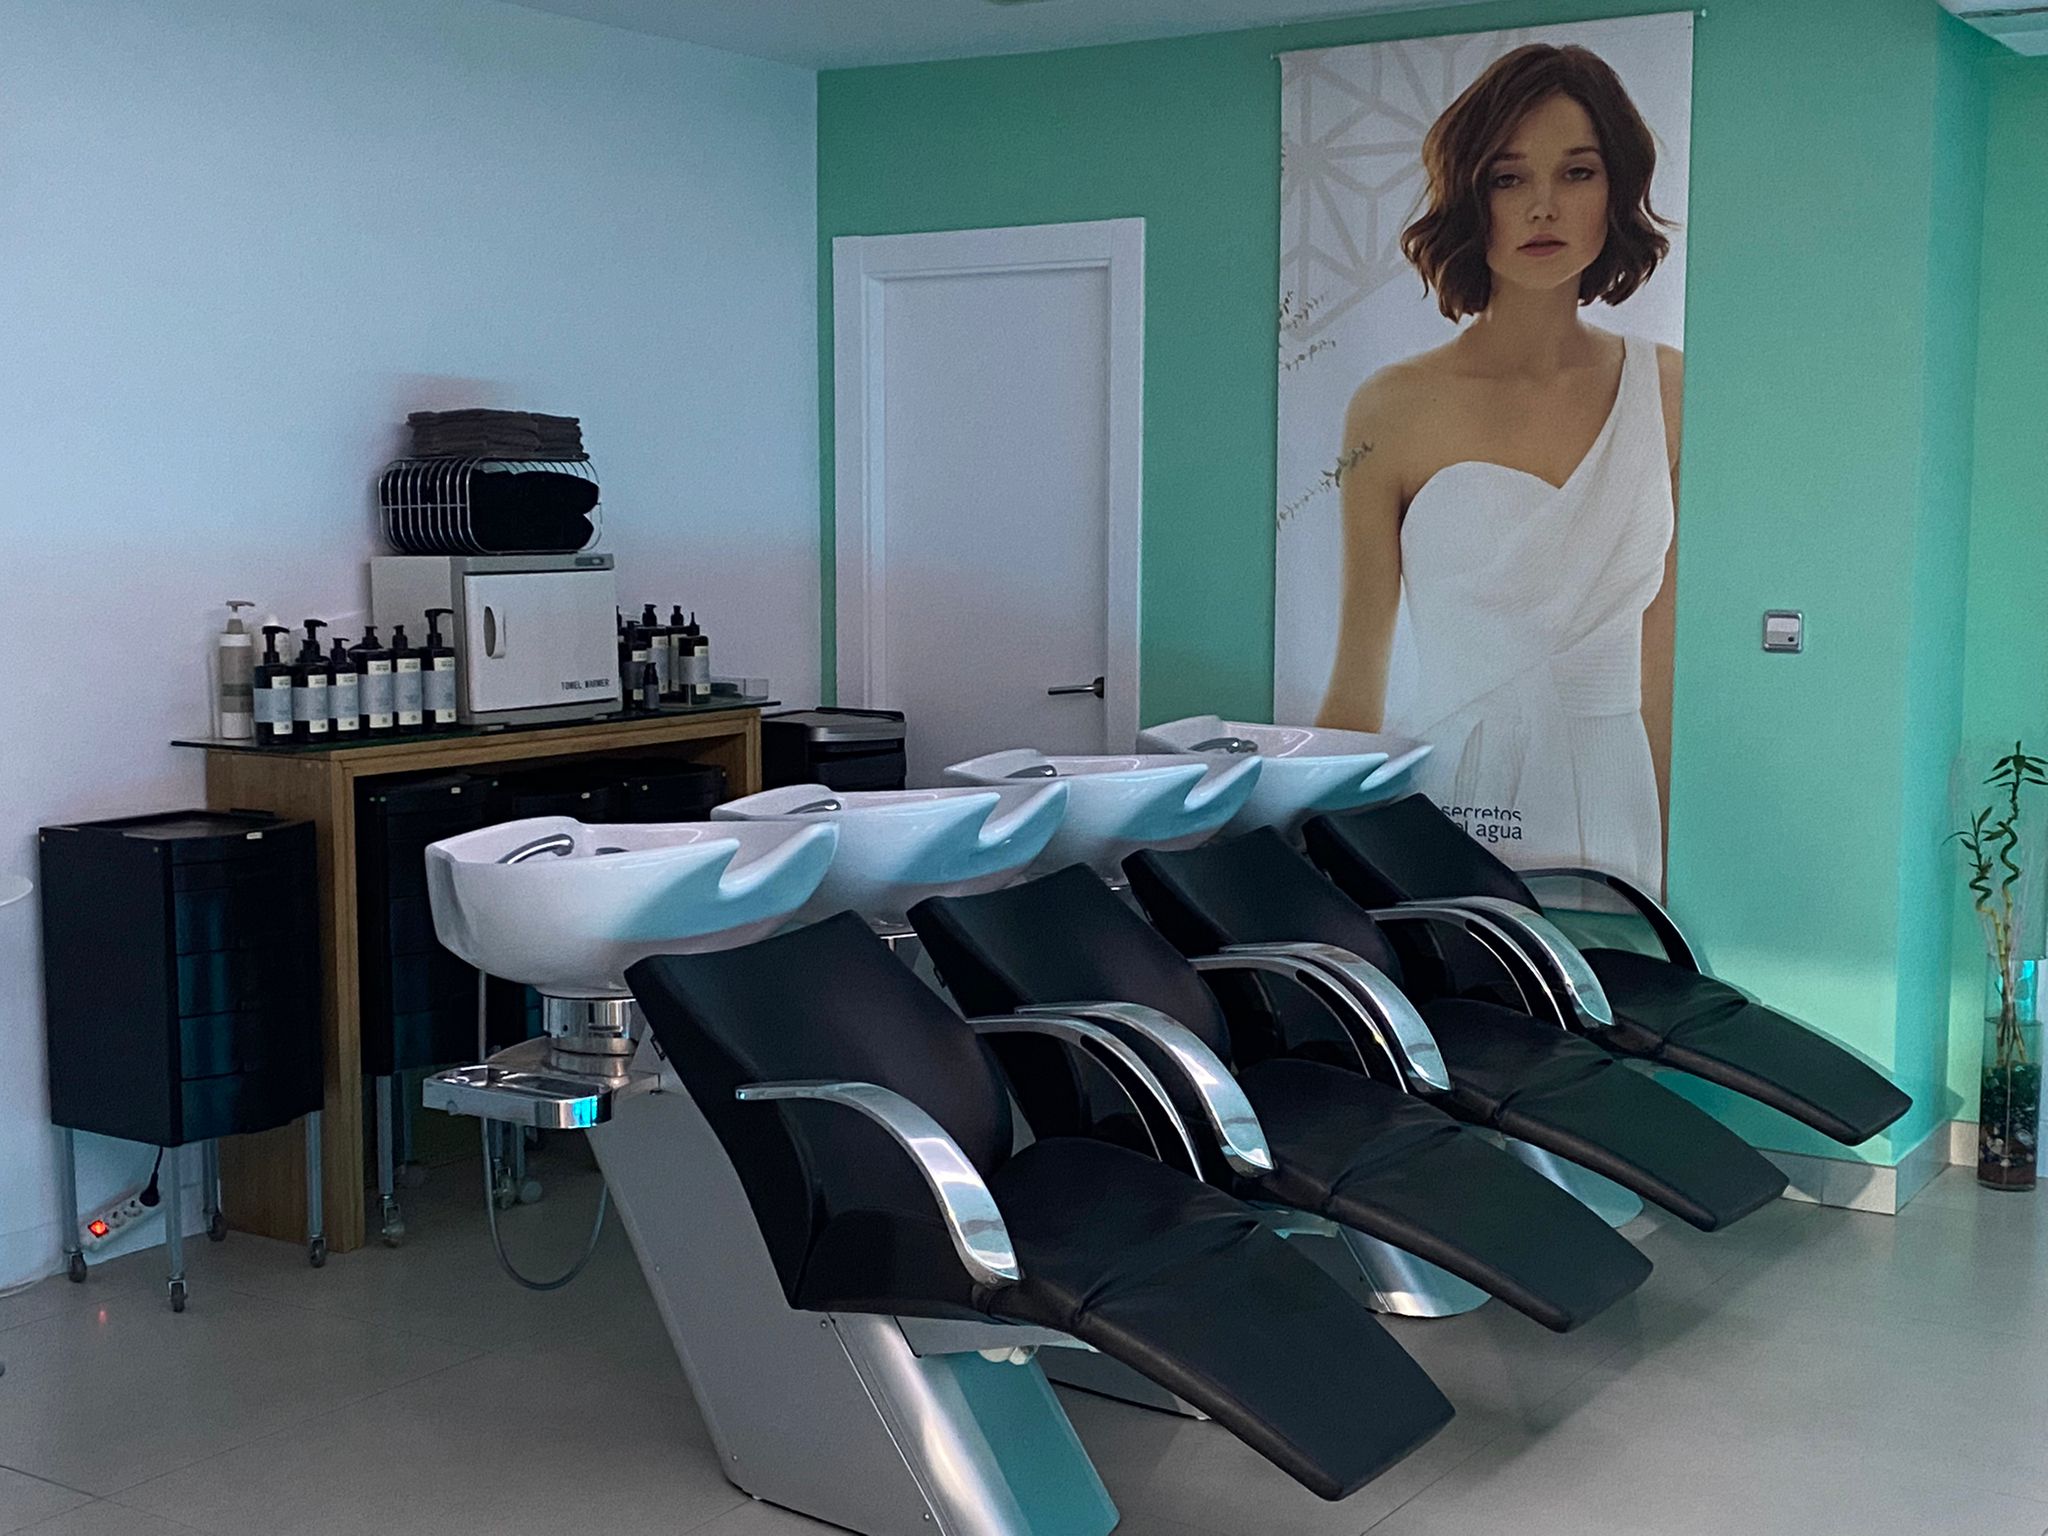 general view of the aqua stylists salon